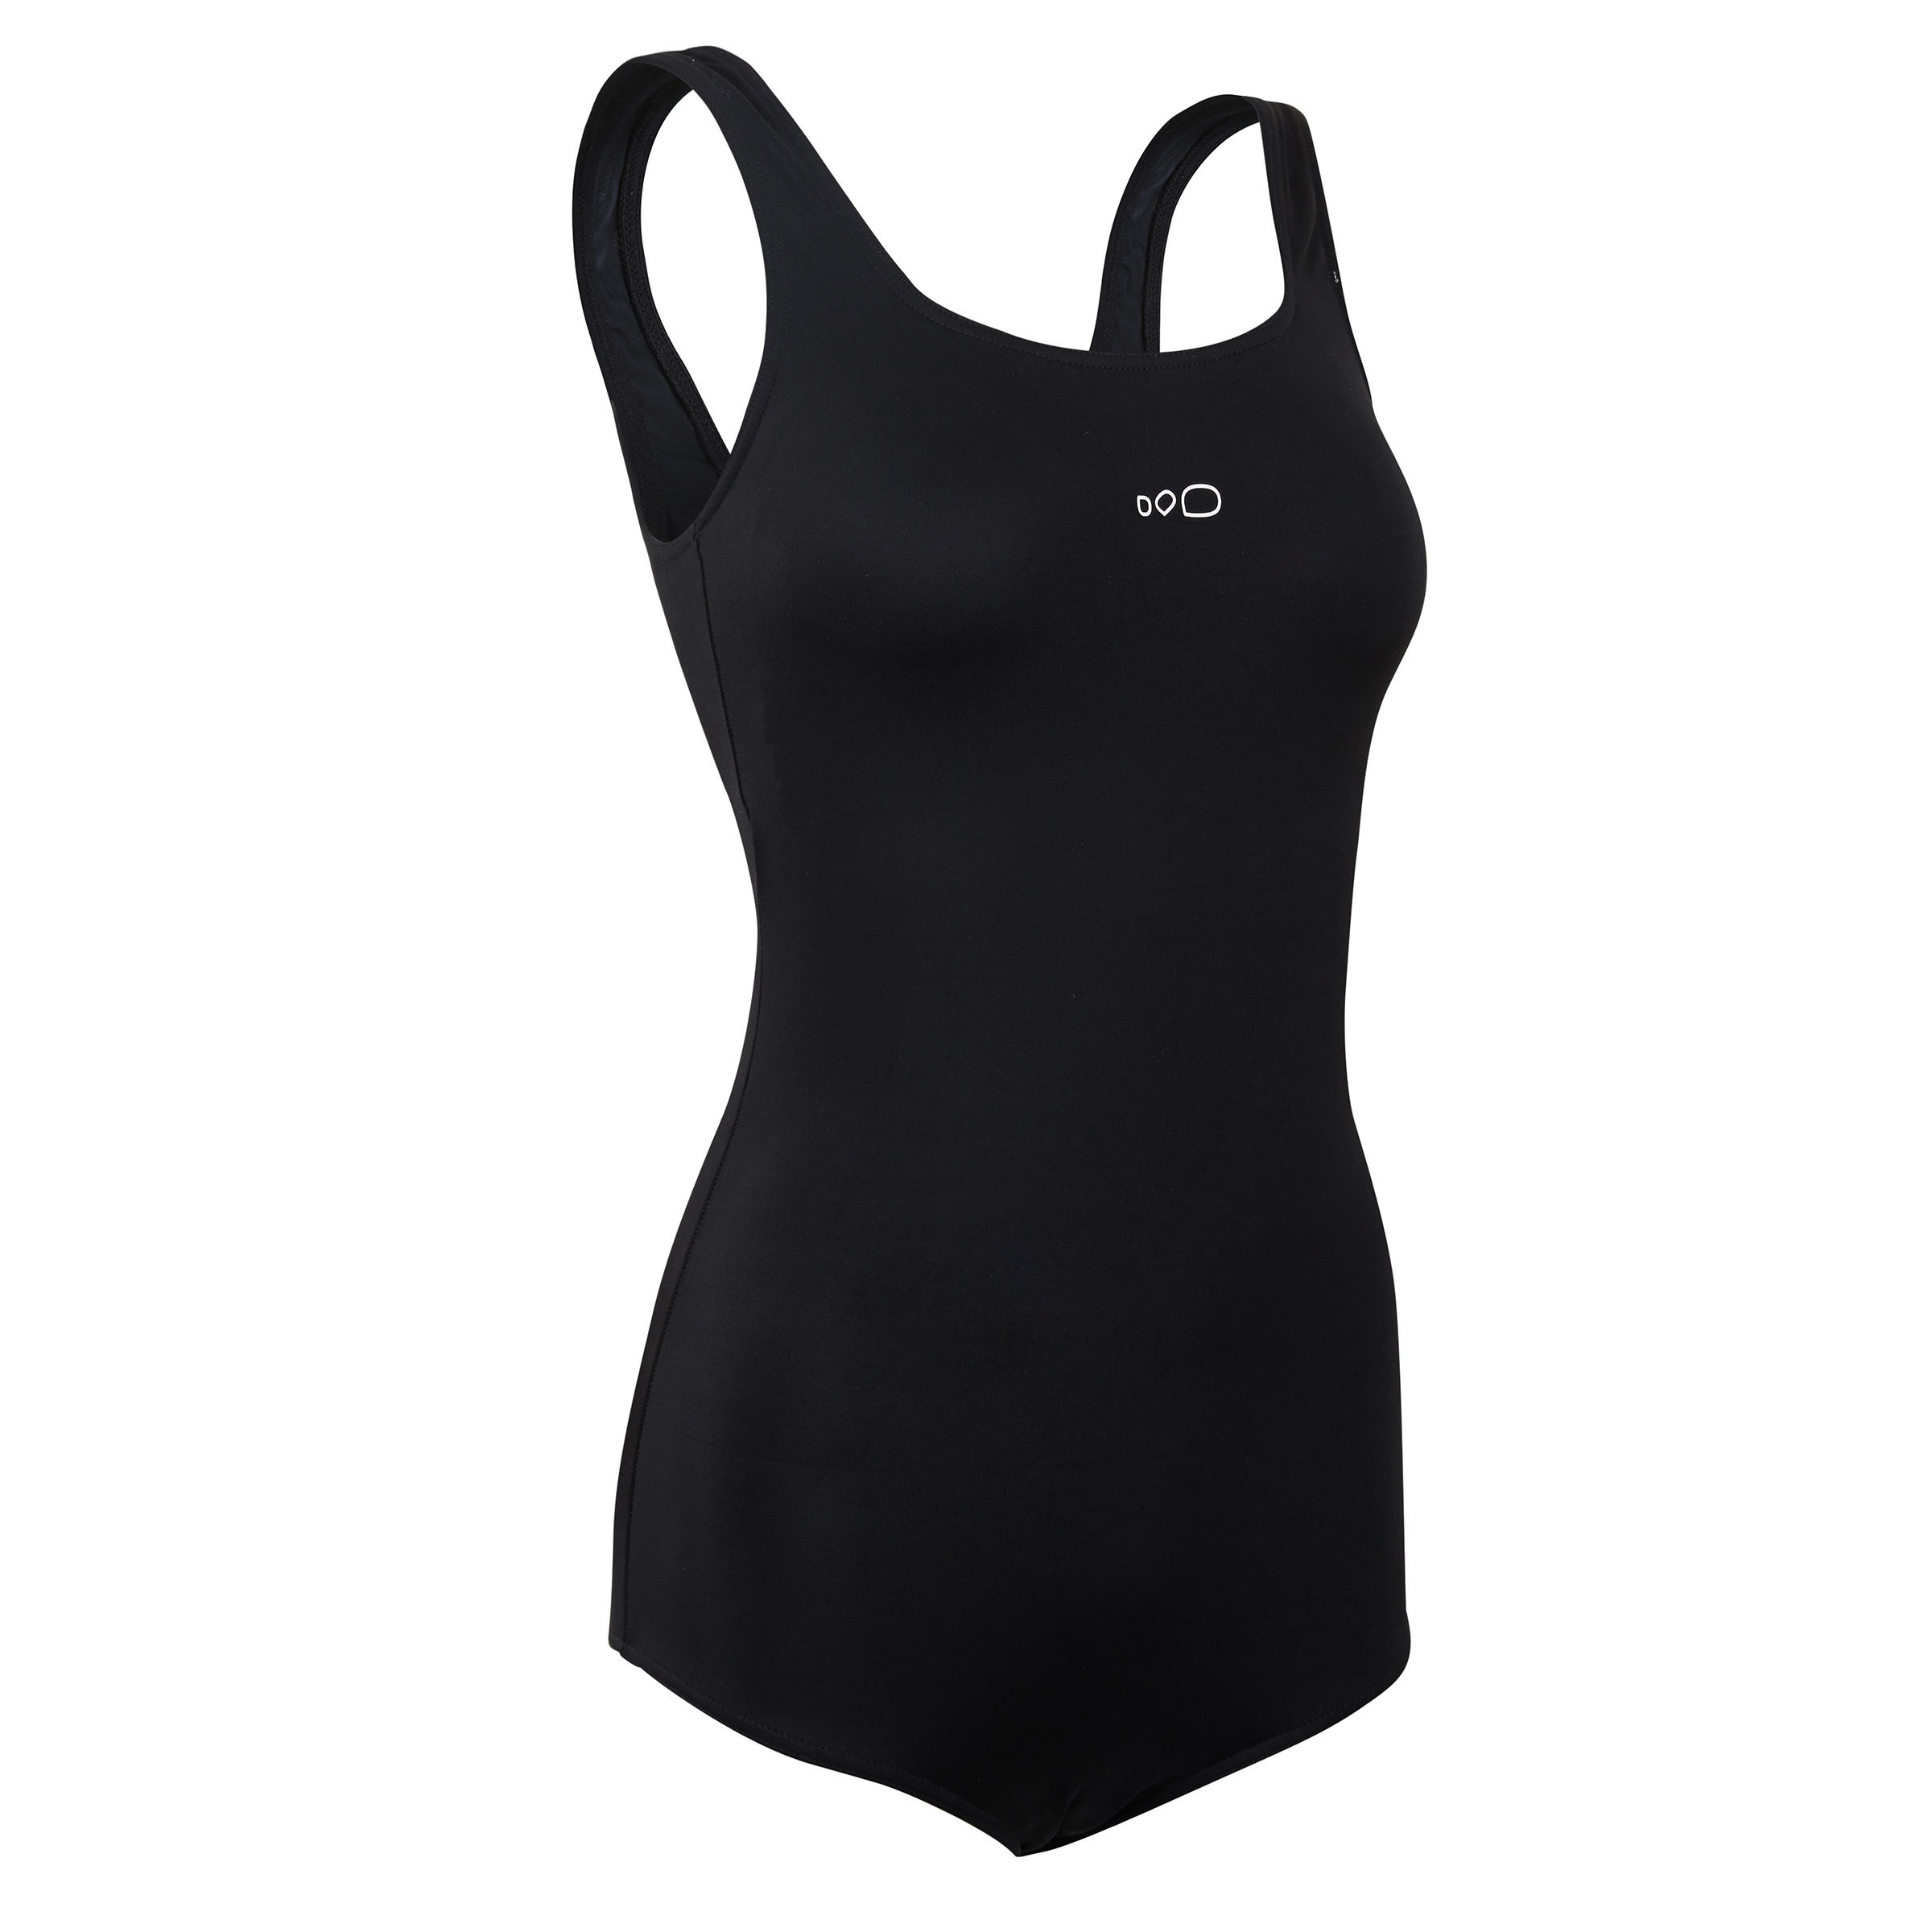 decathlon swimming costume for womens